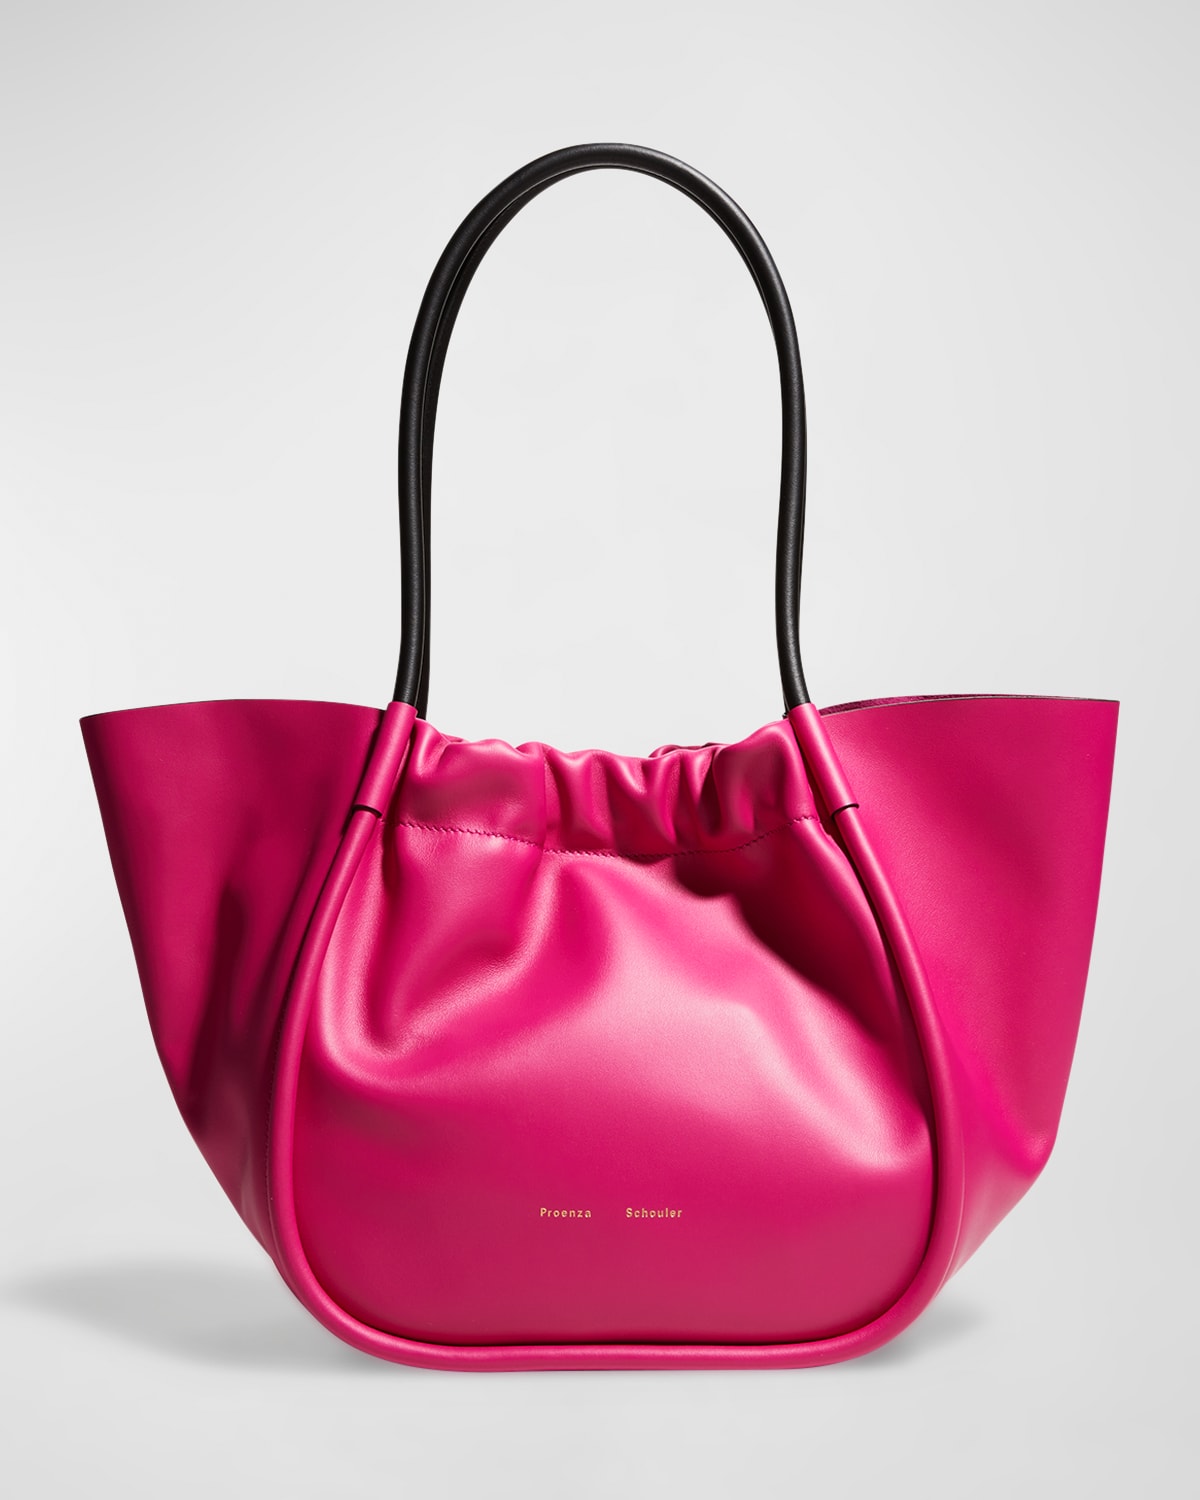 HEAD Fusion Bag in Pink Fuscia Hand Bag Large Shopper Gym Travel RRP £39.99